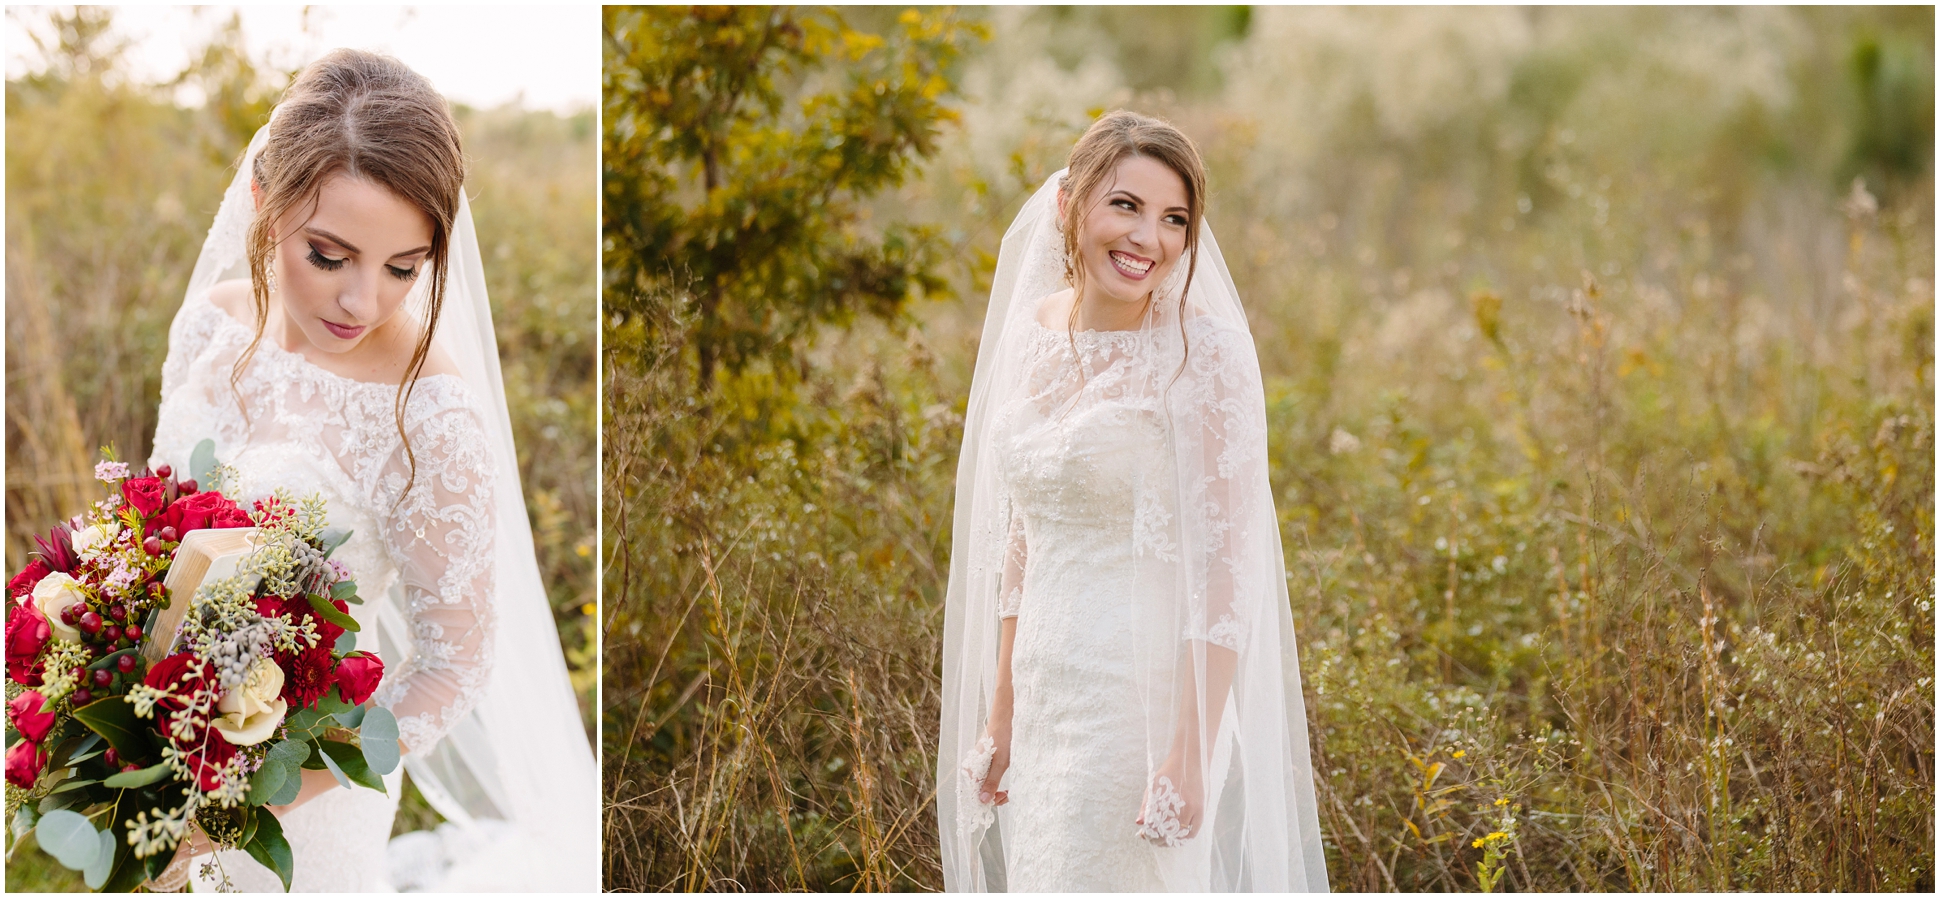 A Dreamy High Cotton Field Wedding | Twin Oaks Farm | Georgia Wedding Photographers | Two Chics Photography | www.twochicsphotography.com